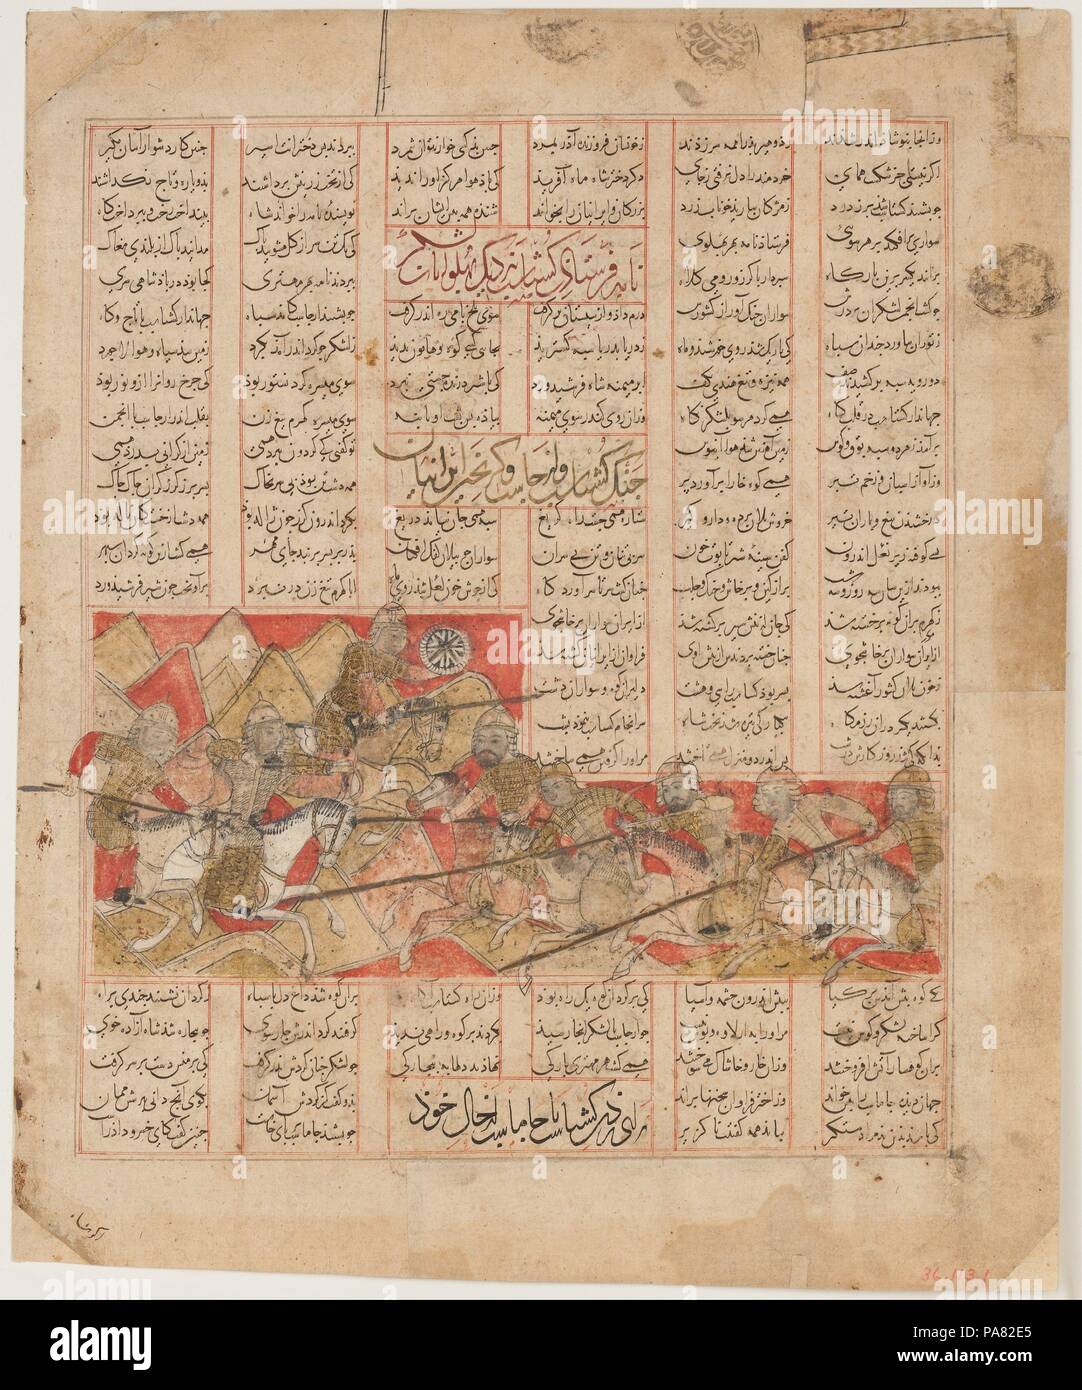 'Iranian and Turanian Armies in Combat', Folio from a Shahnama (Book of Kings). Author: Abu'l Qasim Firdausi (935-1020). Calligrapher: Hasan ibn Muhammad ibn `Ali ibn (?) Husaini, known as al-Mausili. Dimensions: Painting with Text Block: H. 11 3/8 in. (28.9 cm)   W. 9 9/16 in. (24.3 cm)  Page: H. 13 7/8 in. (35.2 cm)  W. 11 7/16 in. (29.1 cm)  Mat: H. 19 1/4 in. (48.9 cm)   W. 14 1/4 in. (36.2 cm). Patron: Commissioned by al-Hasan Qawam al-Daula wa'l-Din (ca. 1303-57). Date: A.H. 741/A.D. 1341. Museum: Metropolitan Museum of Art, New York, USA. Stock Photo